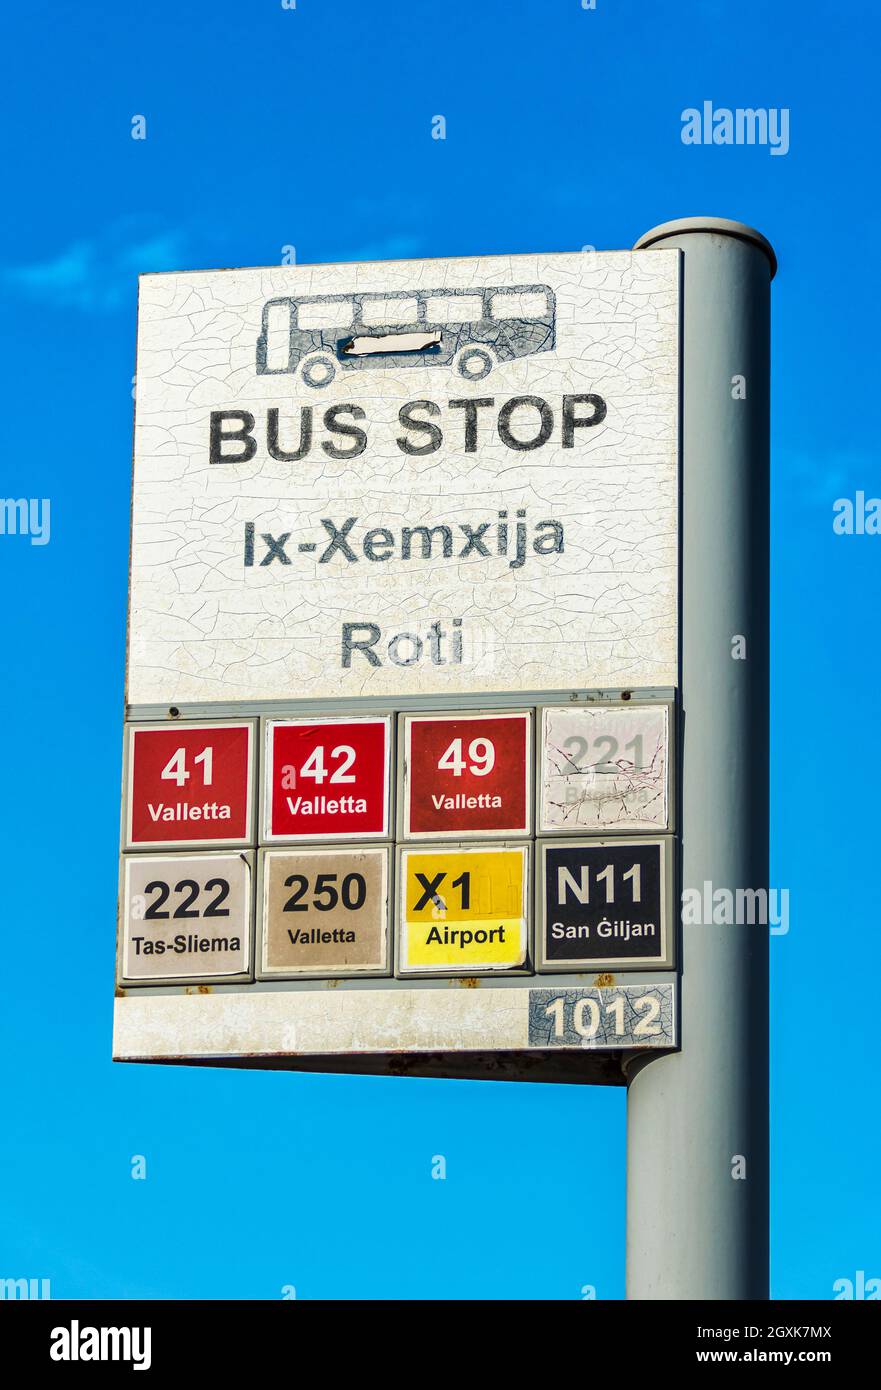 Malta, Xemxija: Malta Public Transport bus stop sign. Stock Photo